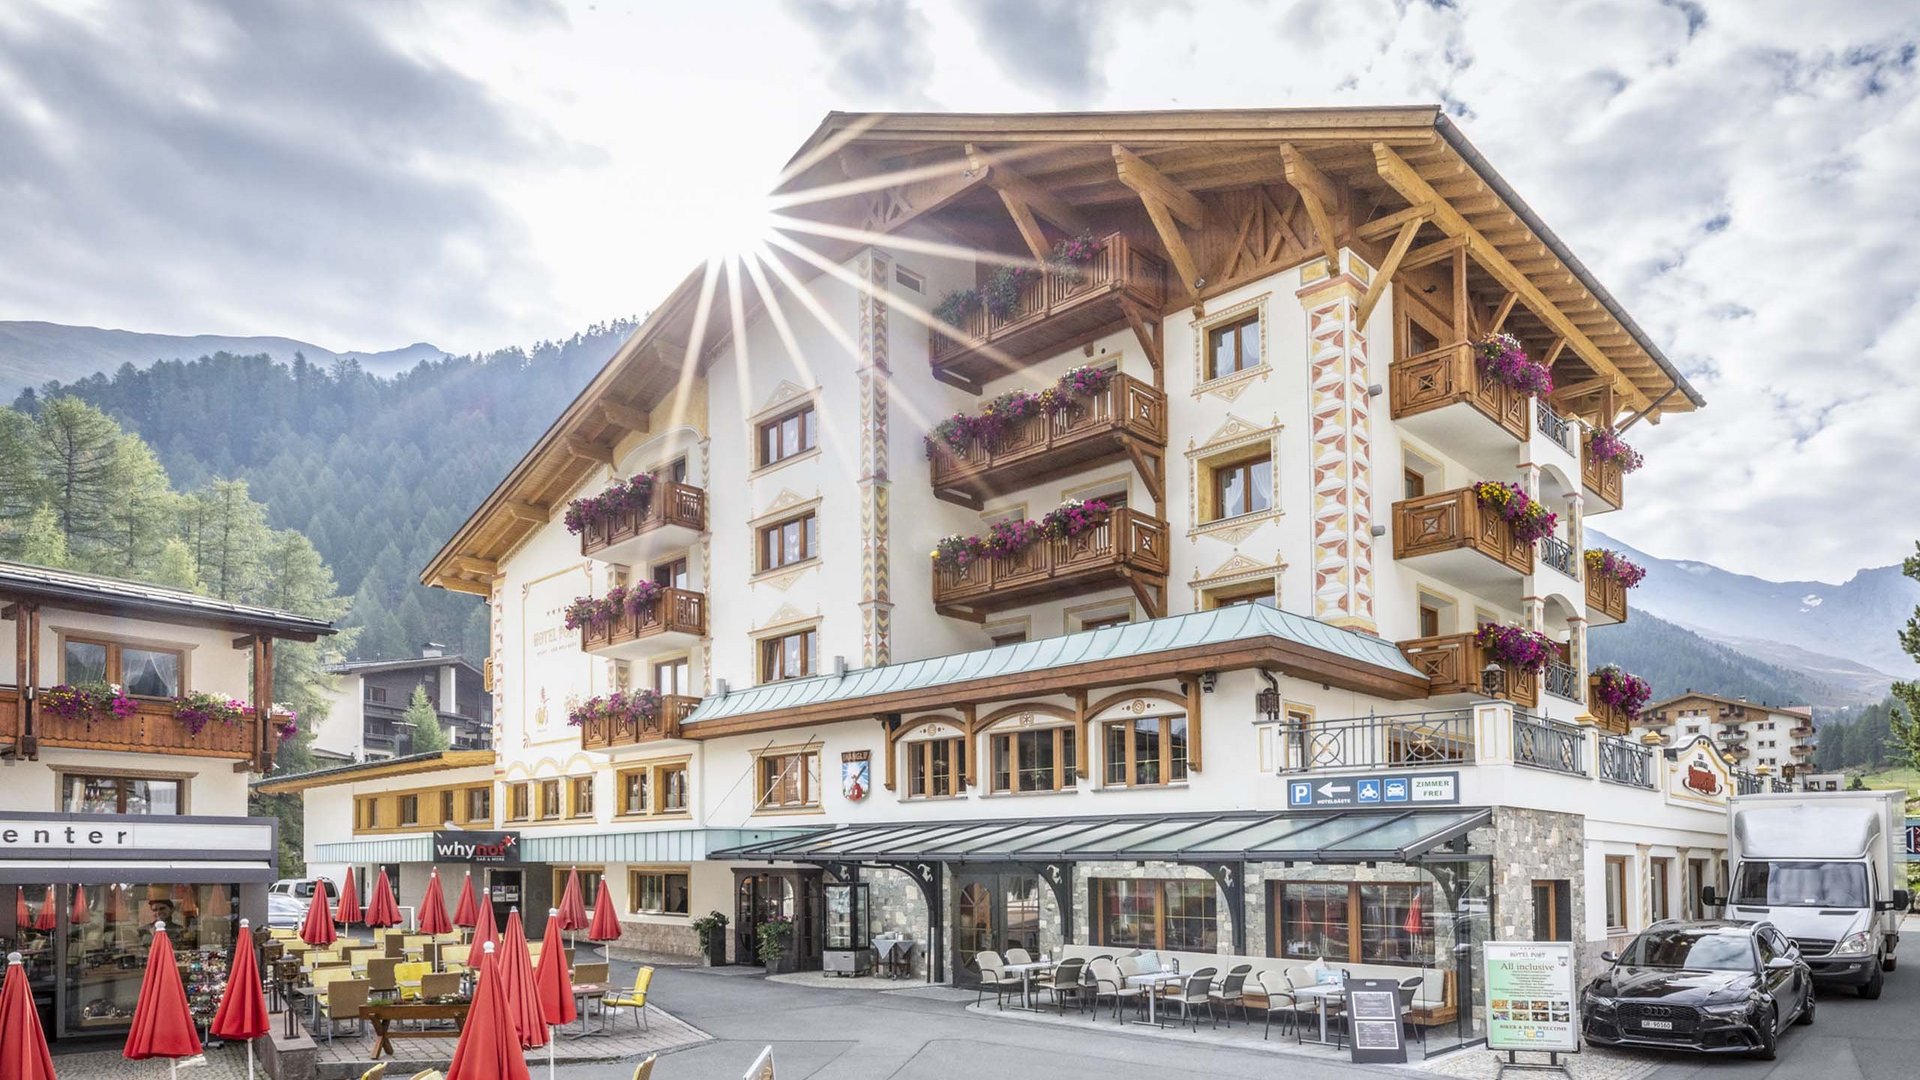 Hotel Post in Switzerland: our spa resort’s services await.